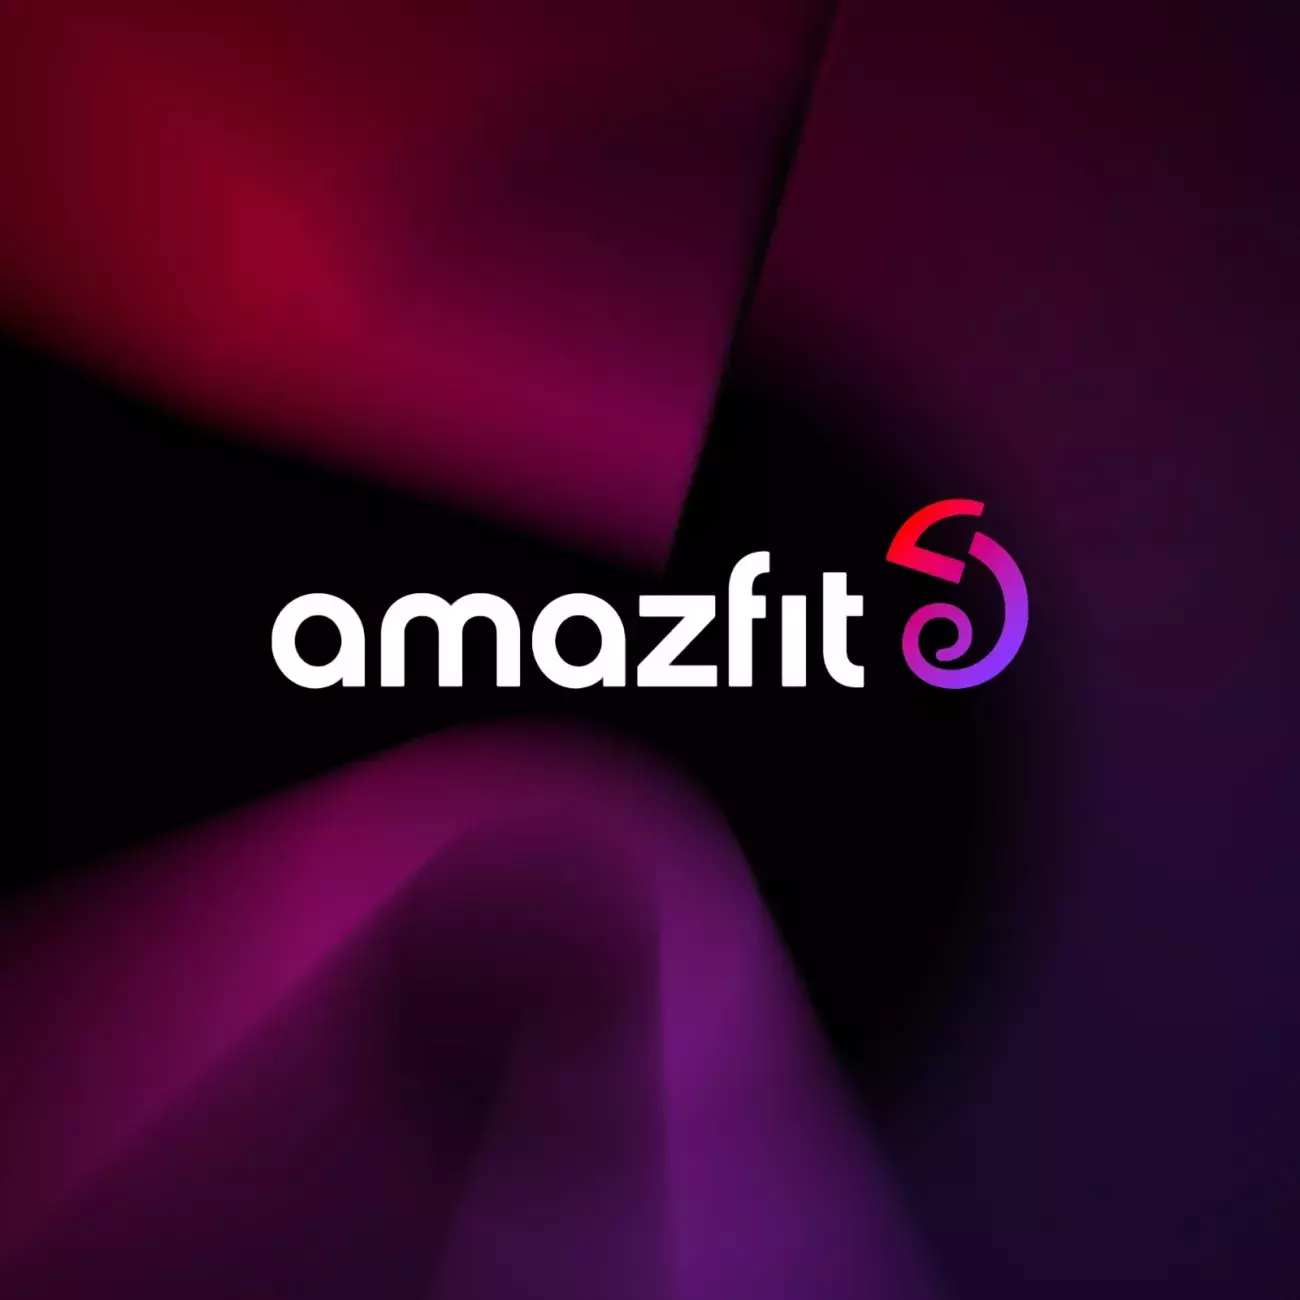 Amazfit Unveils Bold New Brand Identity with Landor